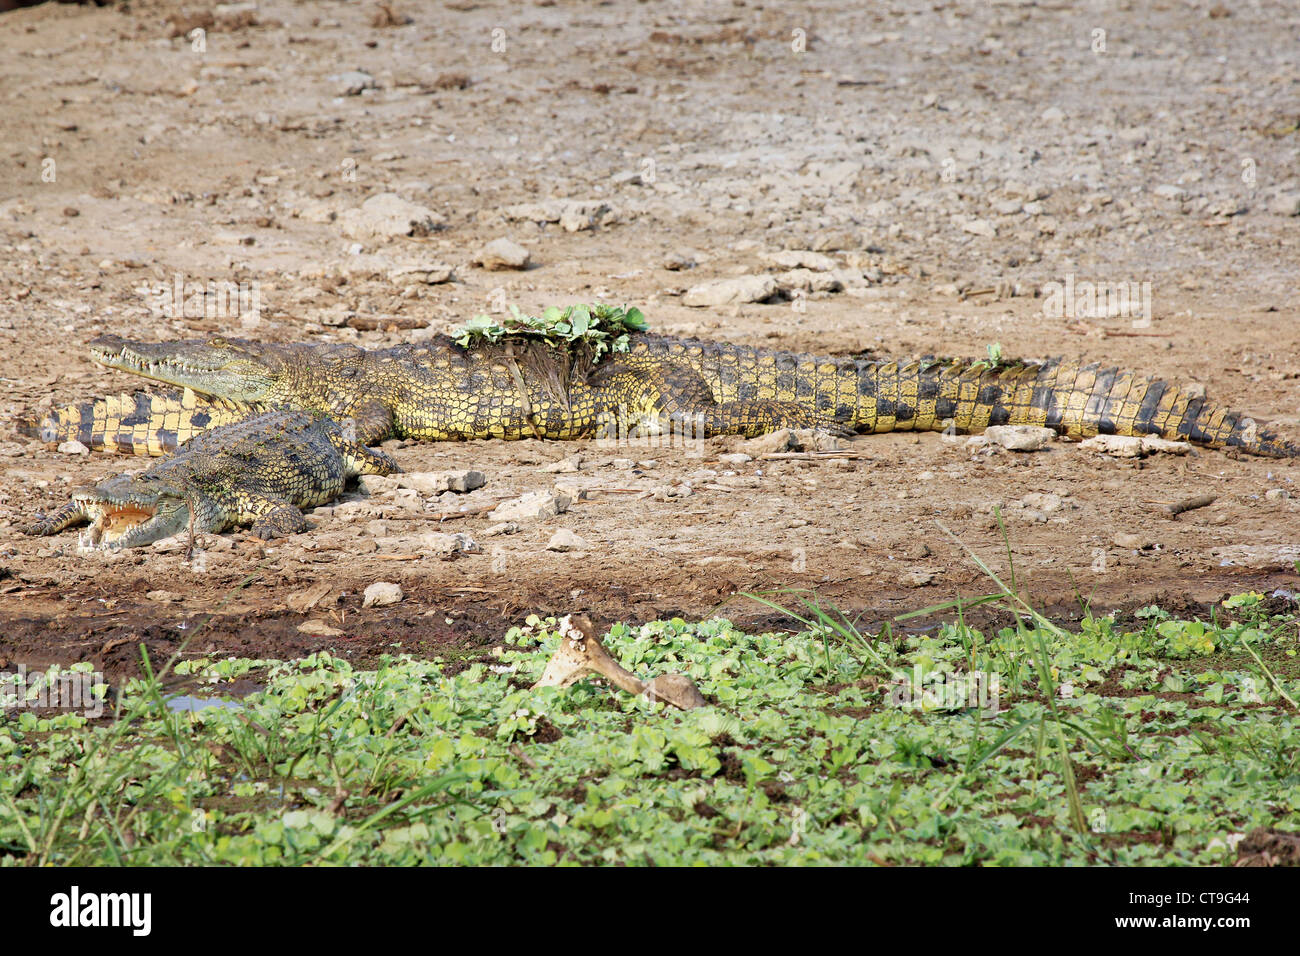 WILD Nile Crocodiles or Common Crocodiles (Crocodylus niloticus) basking on the banks of the Kazinga Channel in Uganda, Africa. Stock Photo